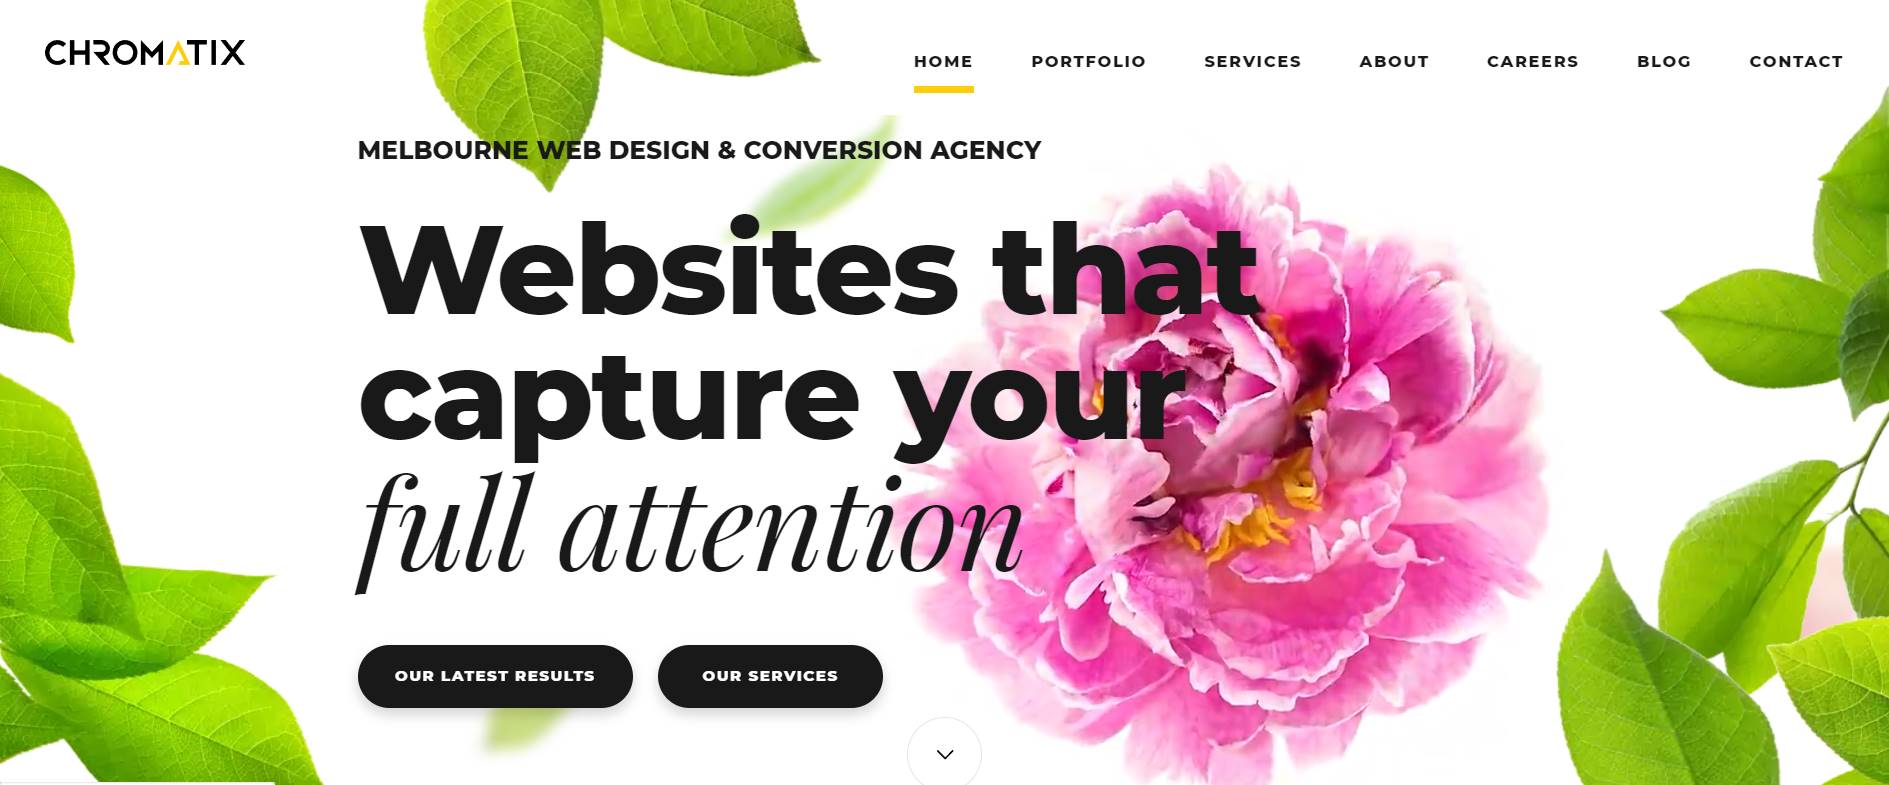 chromatix website designers melbourne